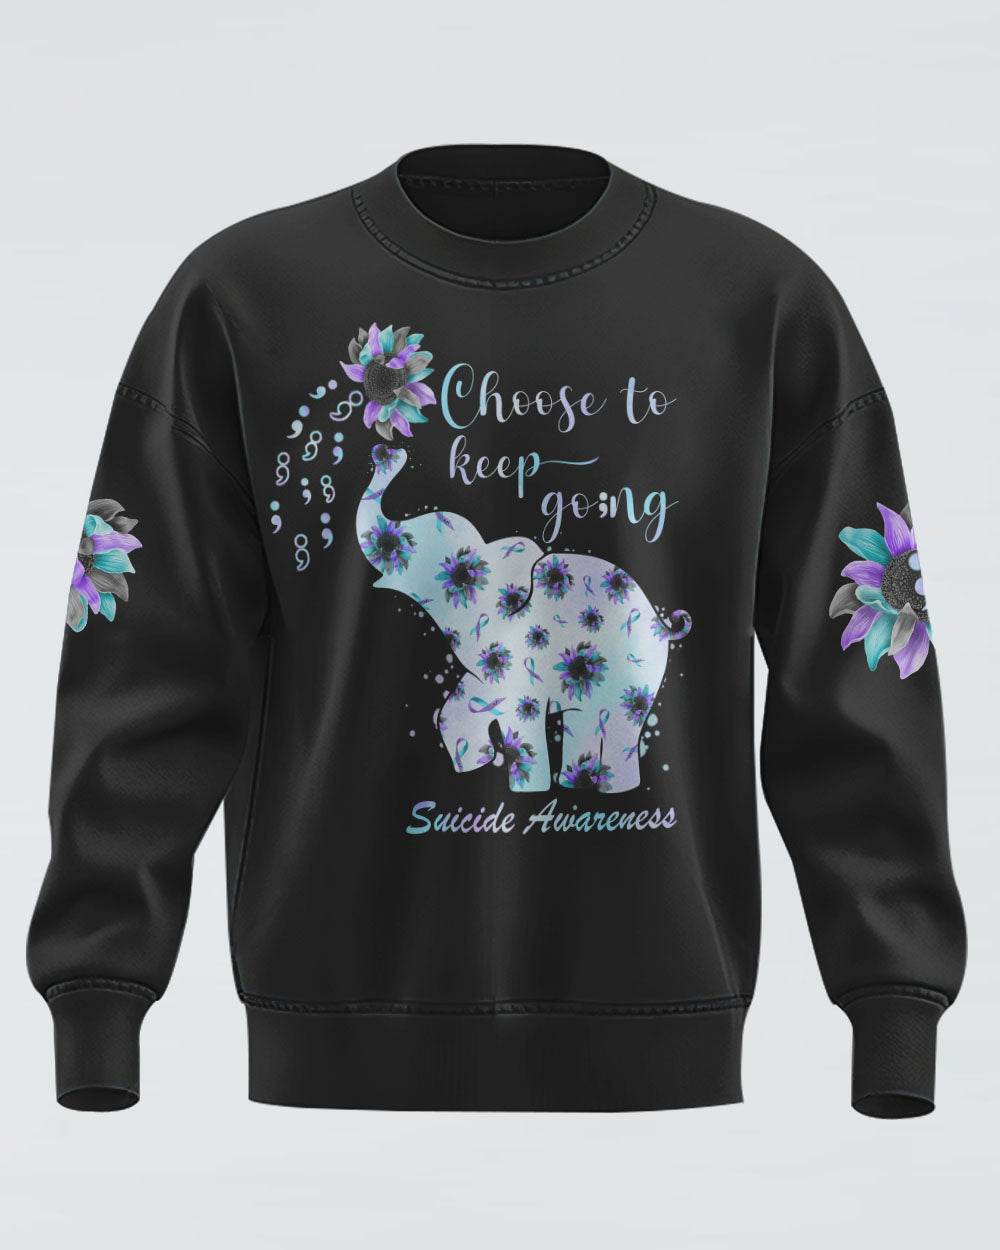 Choose To Keep Going Elephant Sunflower Women's Suicide Prevention Awareness Sweatshirt